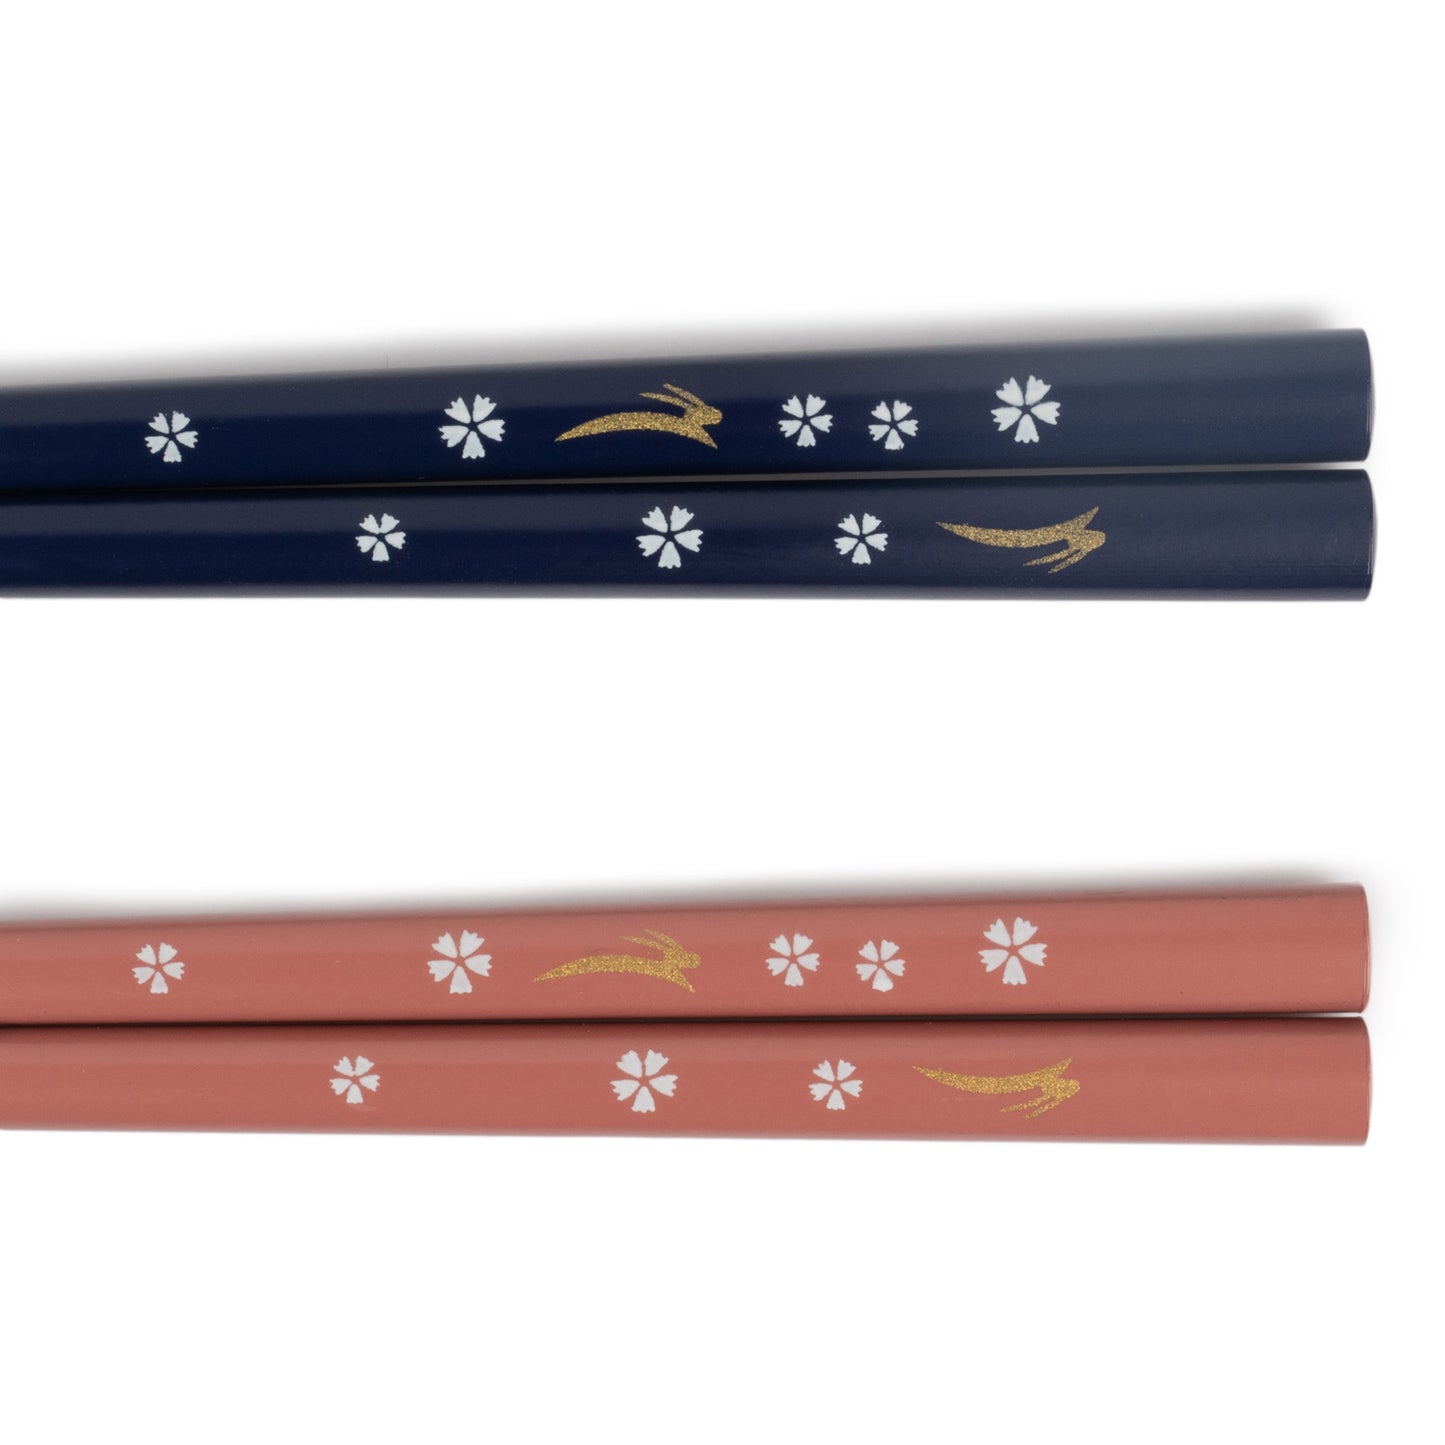 Blue and Pink Blossom Japanese Chopstick Gift Set handles